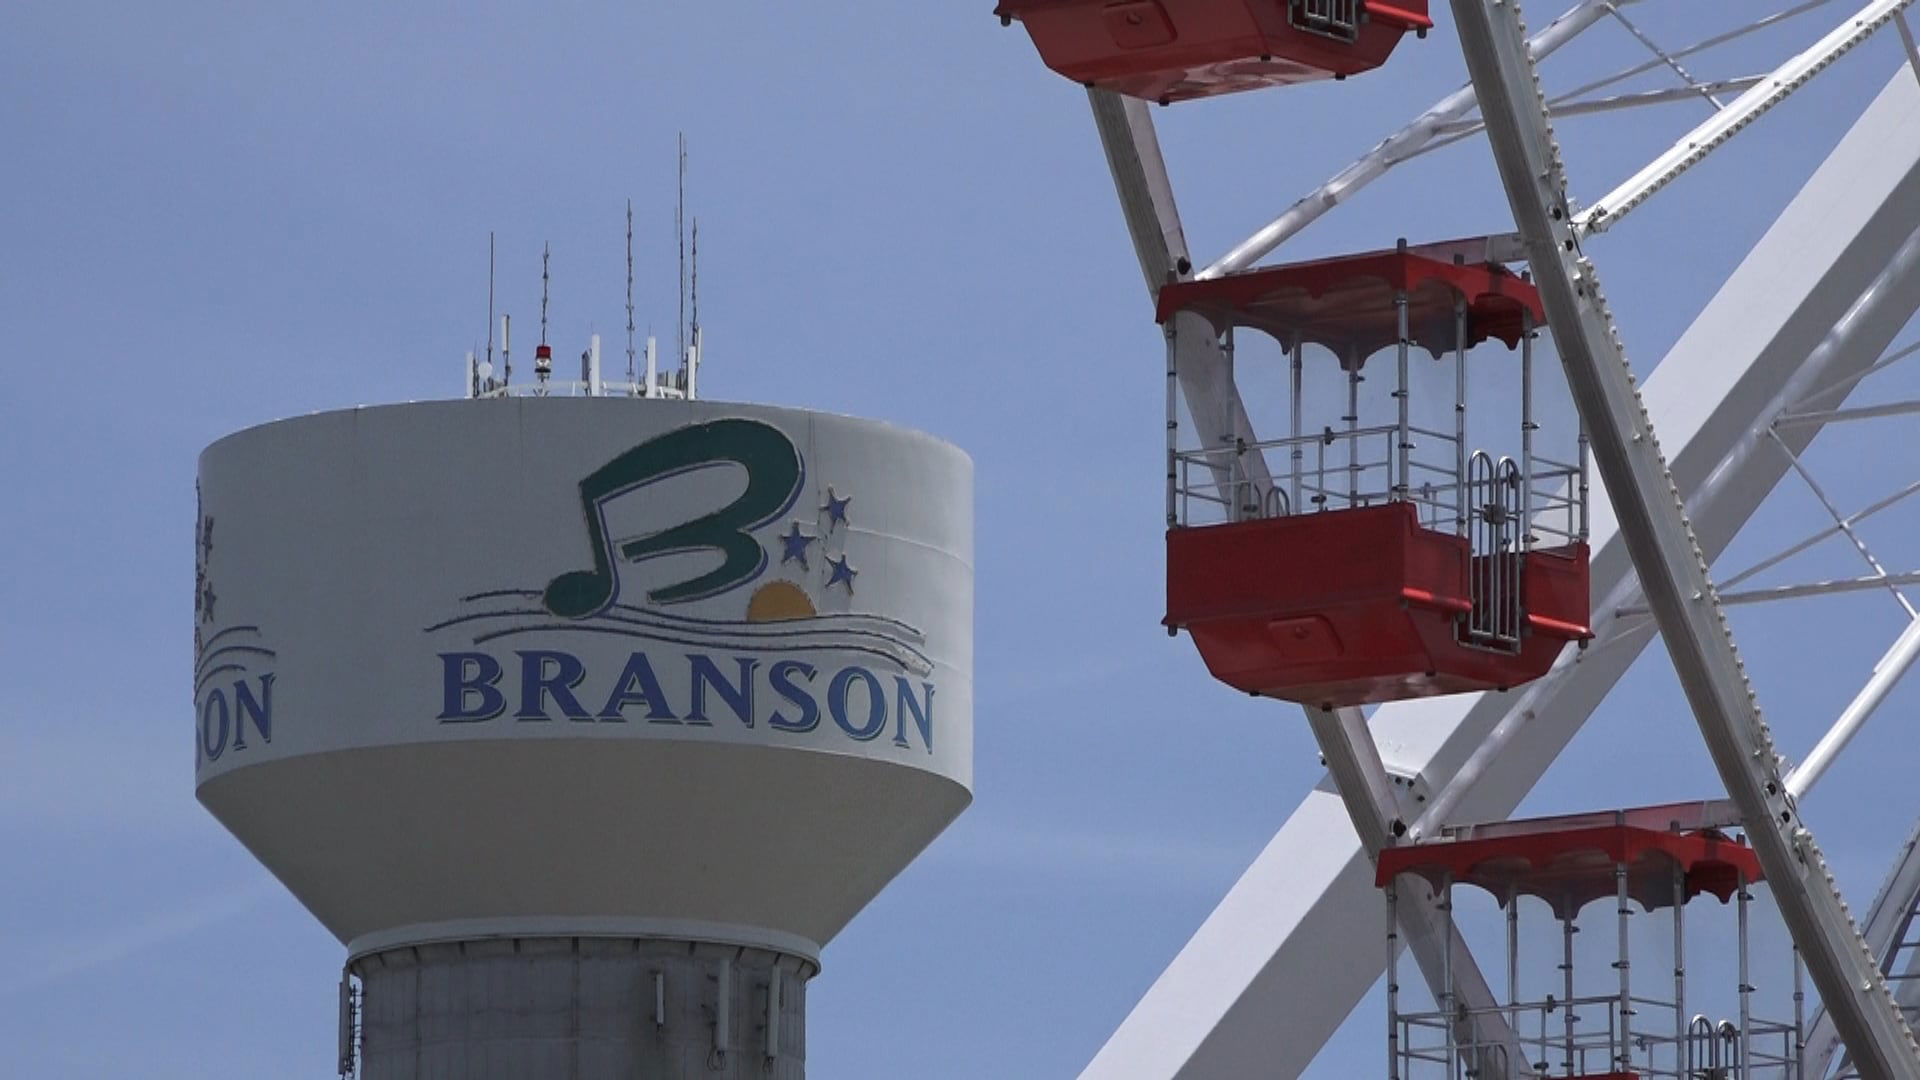 city of branson tourism tax